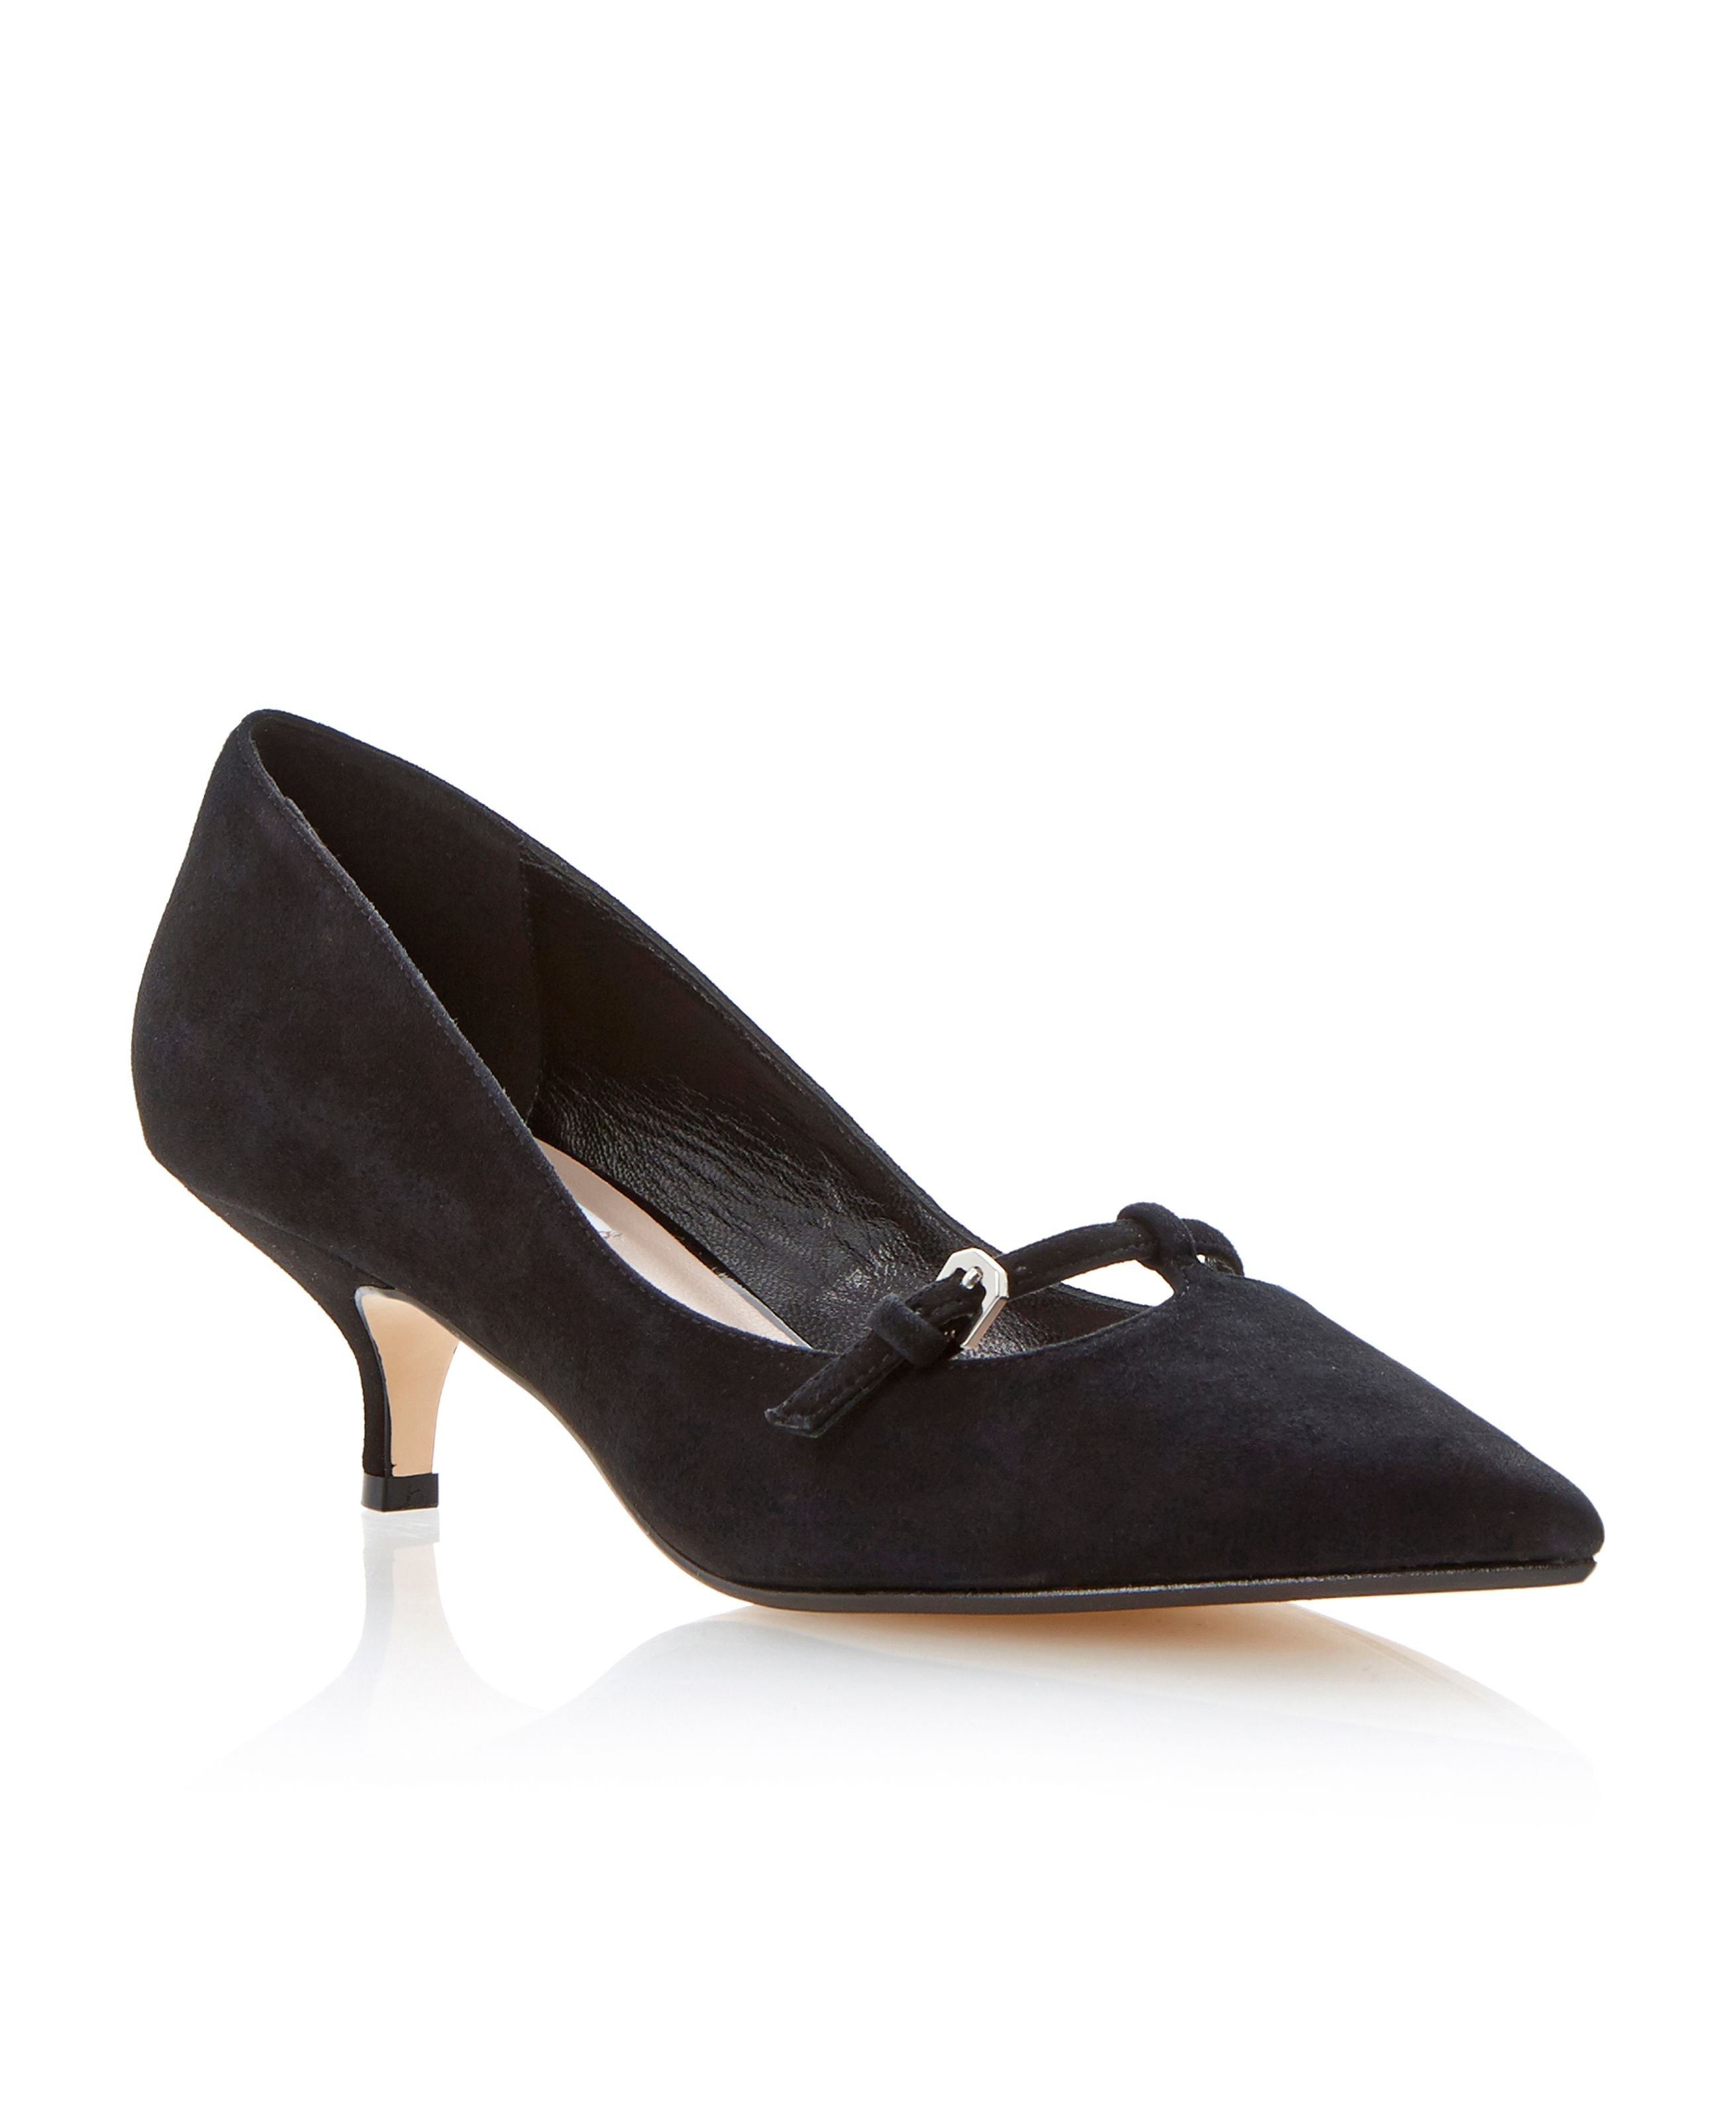 Dune Alyce Suede Pointed Toe Kitten Heel Shoes in Black | Lyst